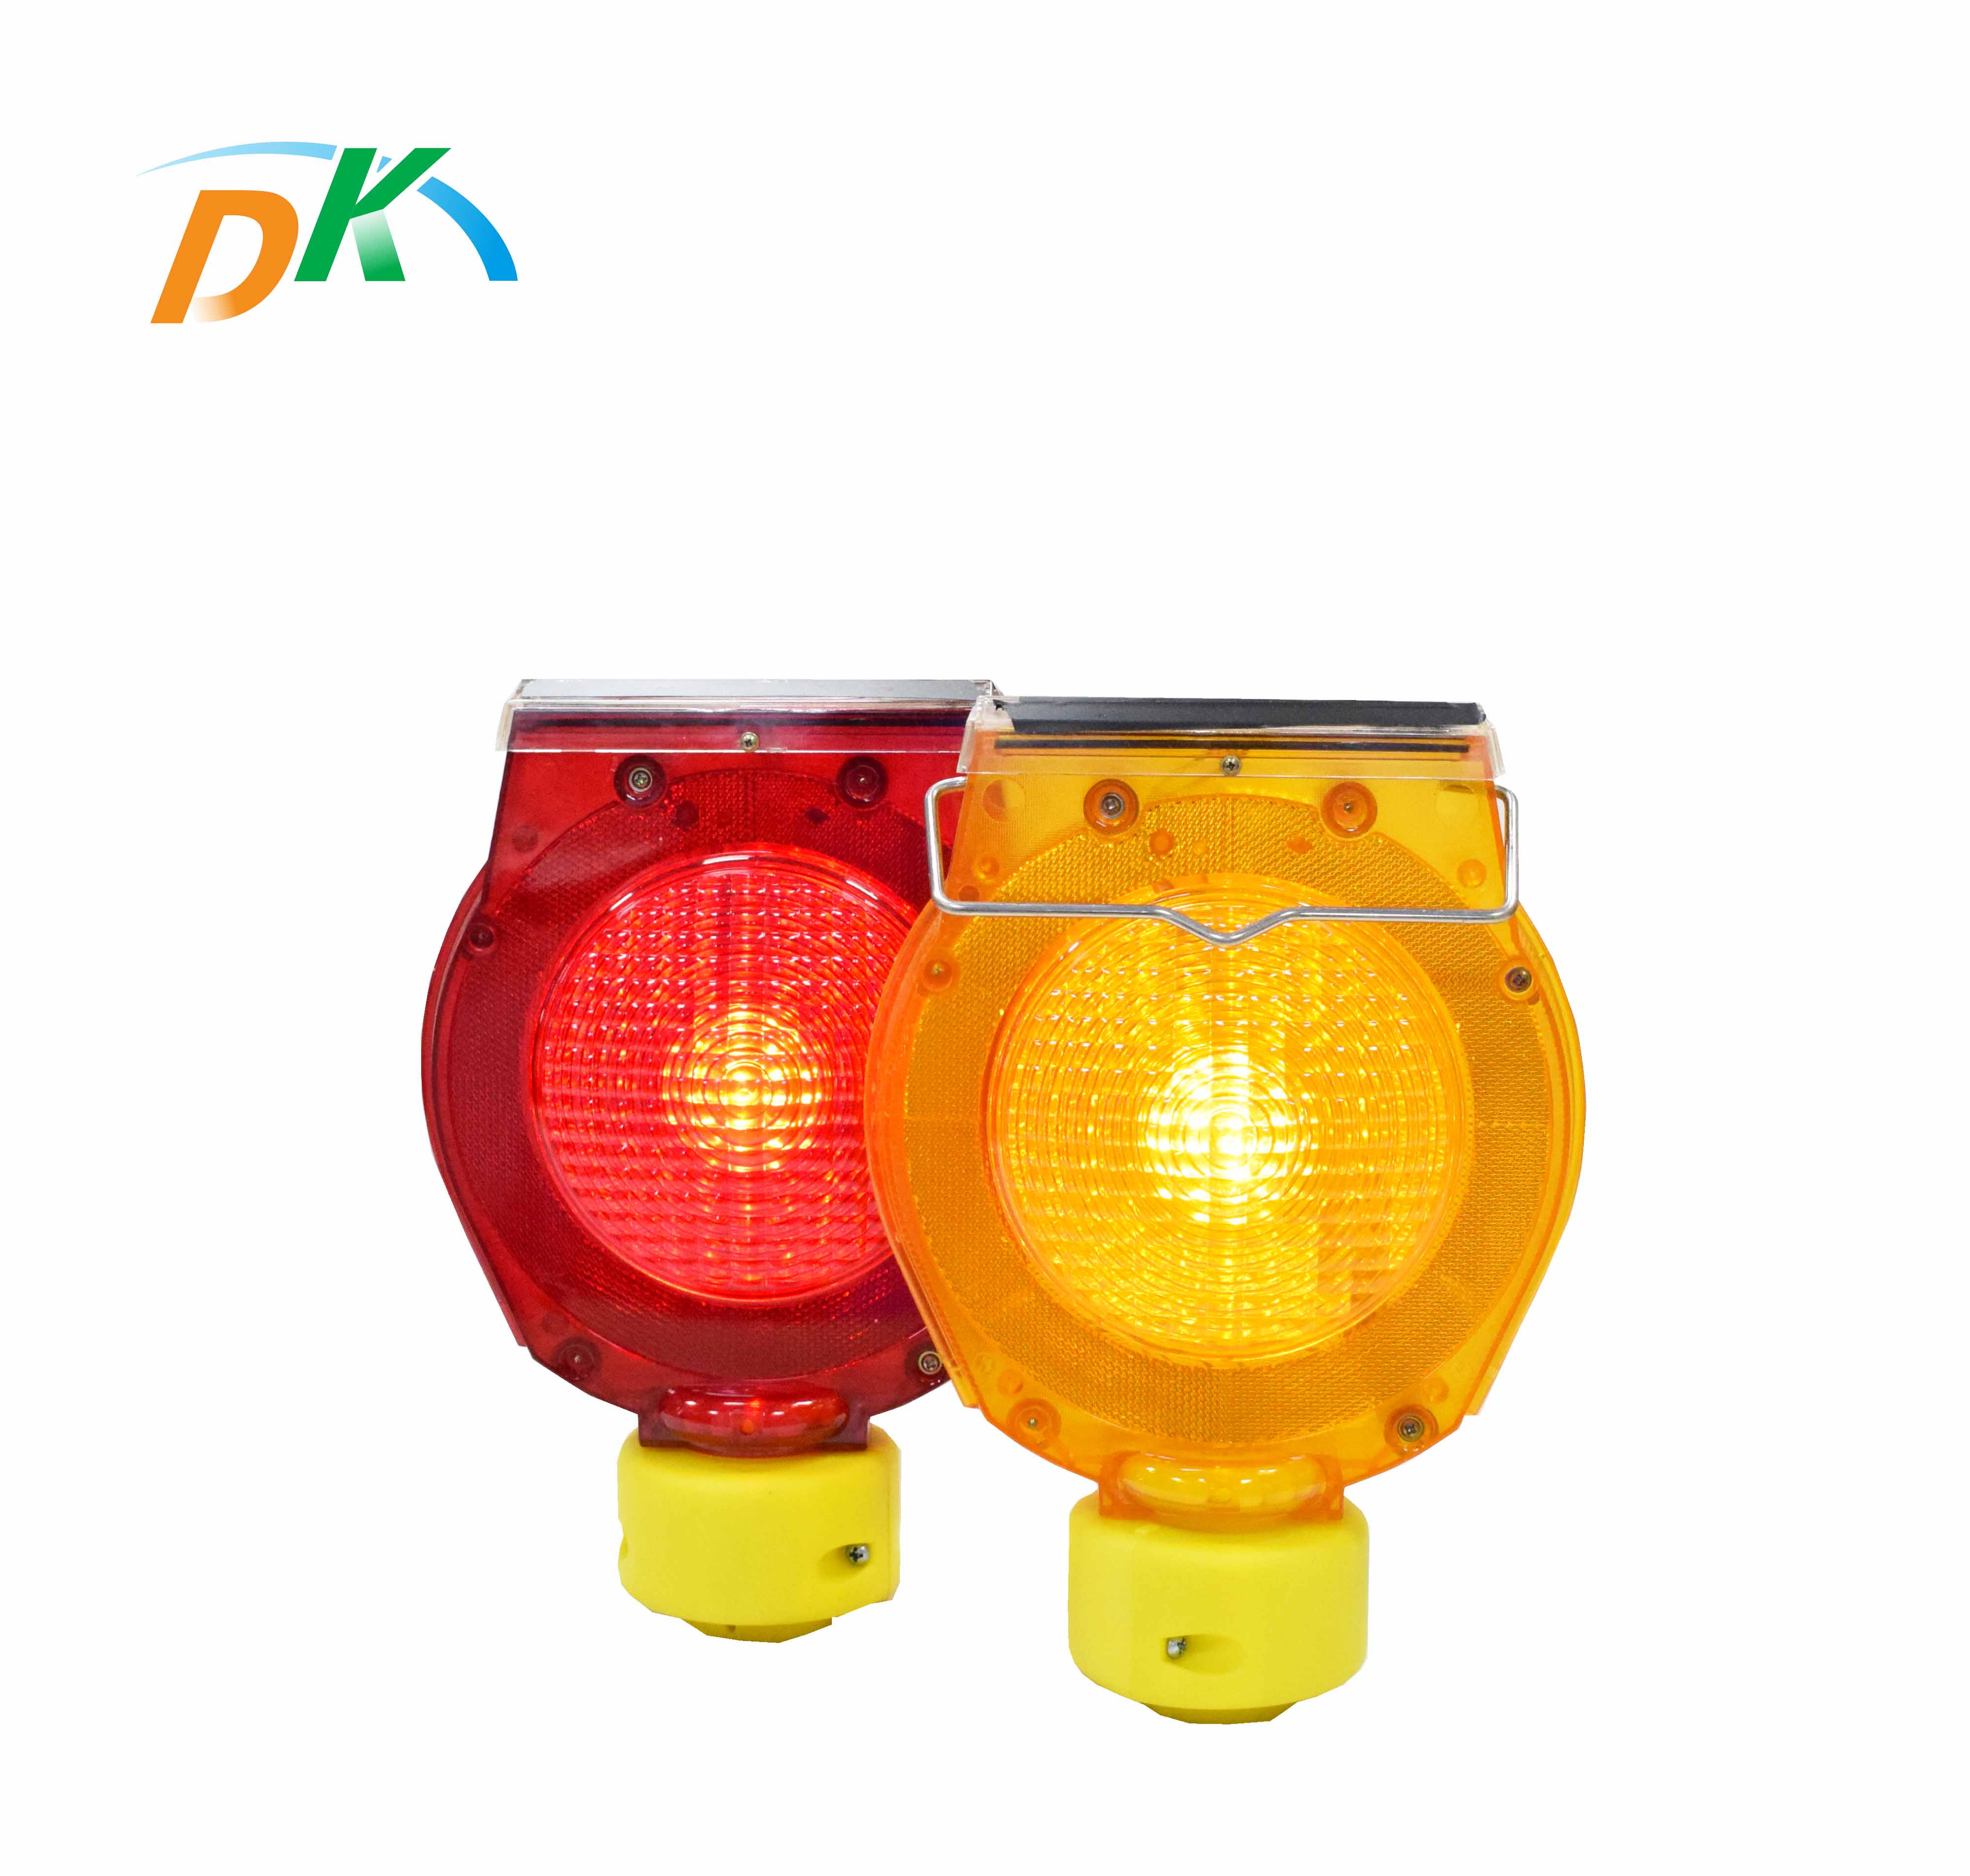 DK LED Hot Sale Solar Traffic Cone Warning Light LED Barricade Flares Traffic Warning Light